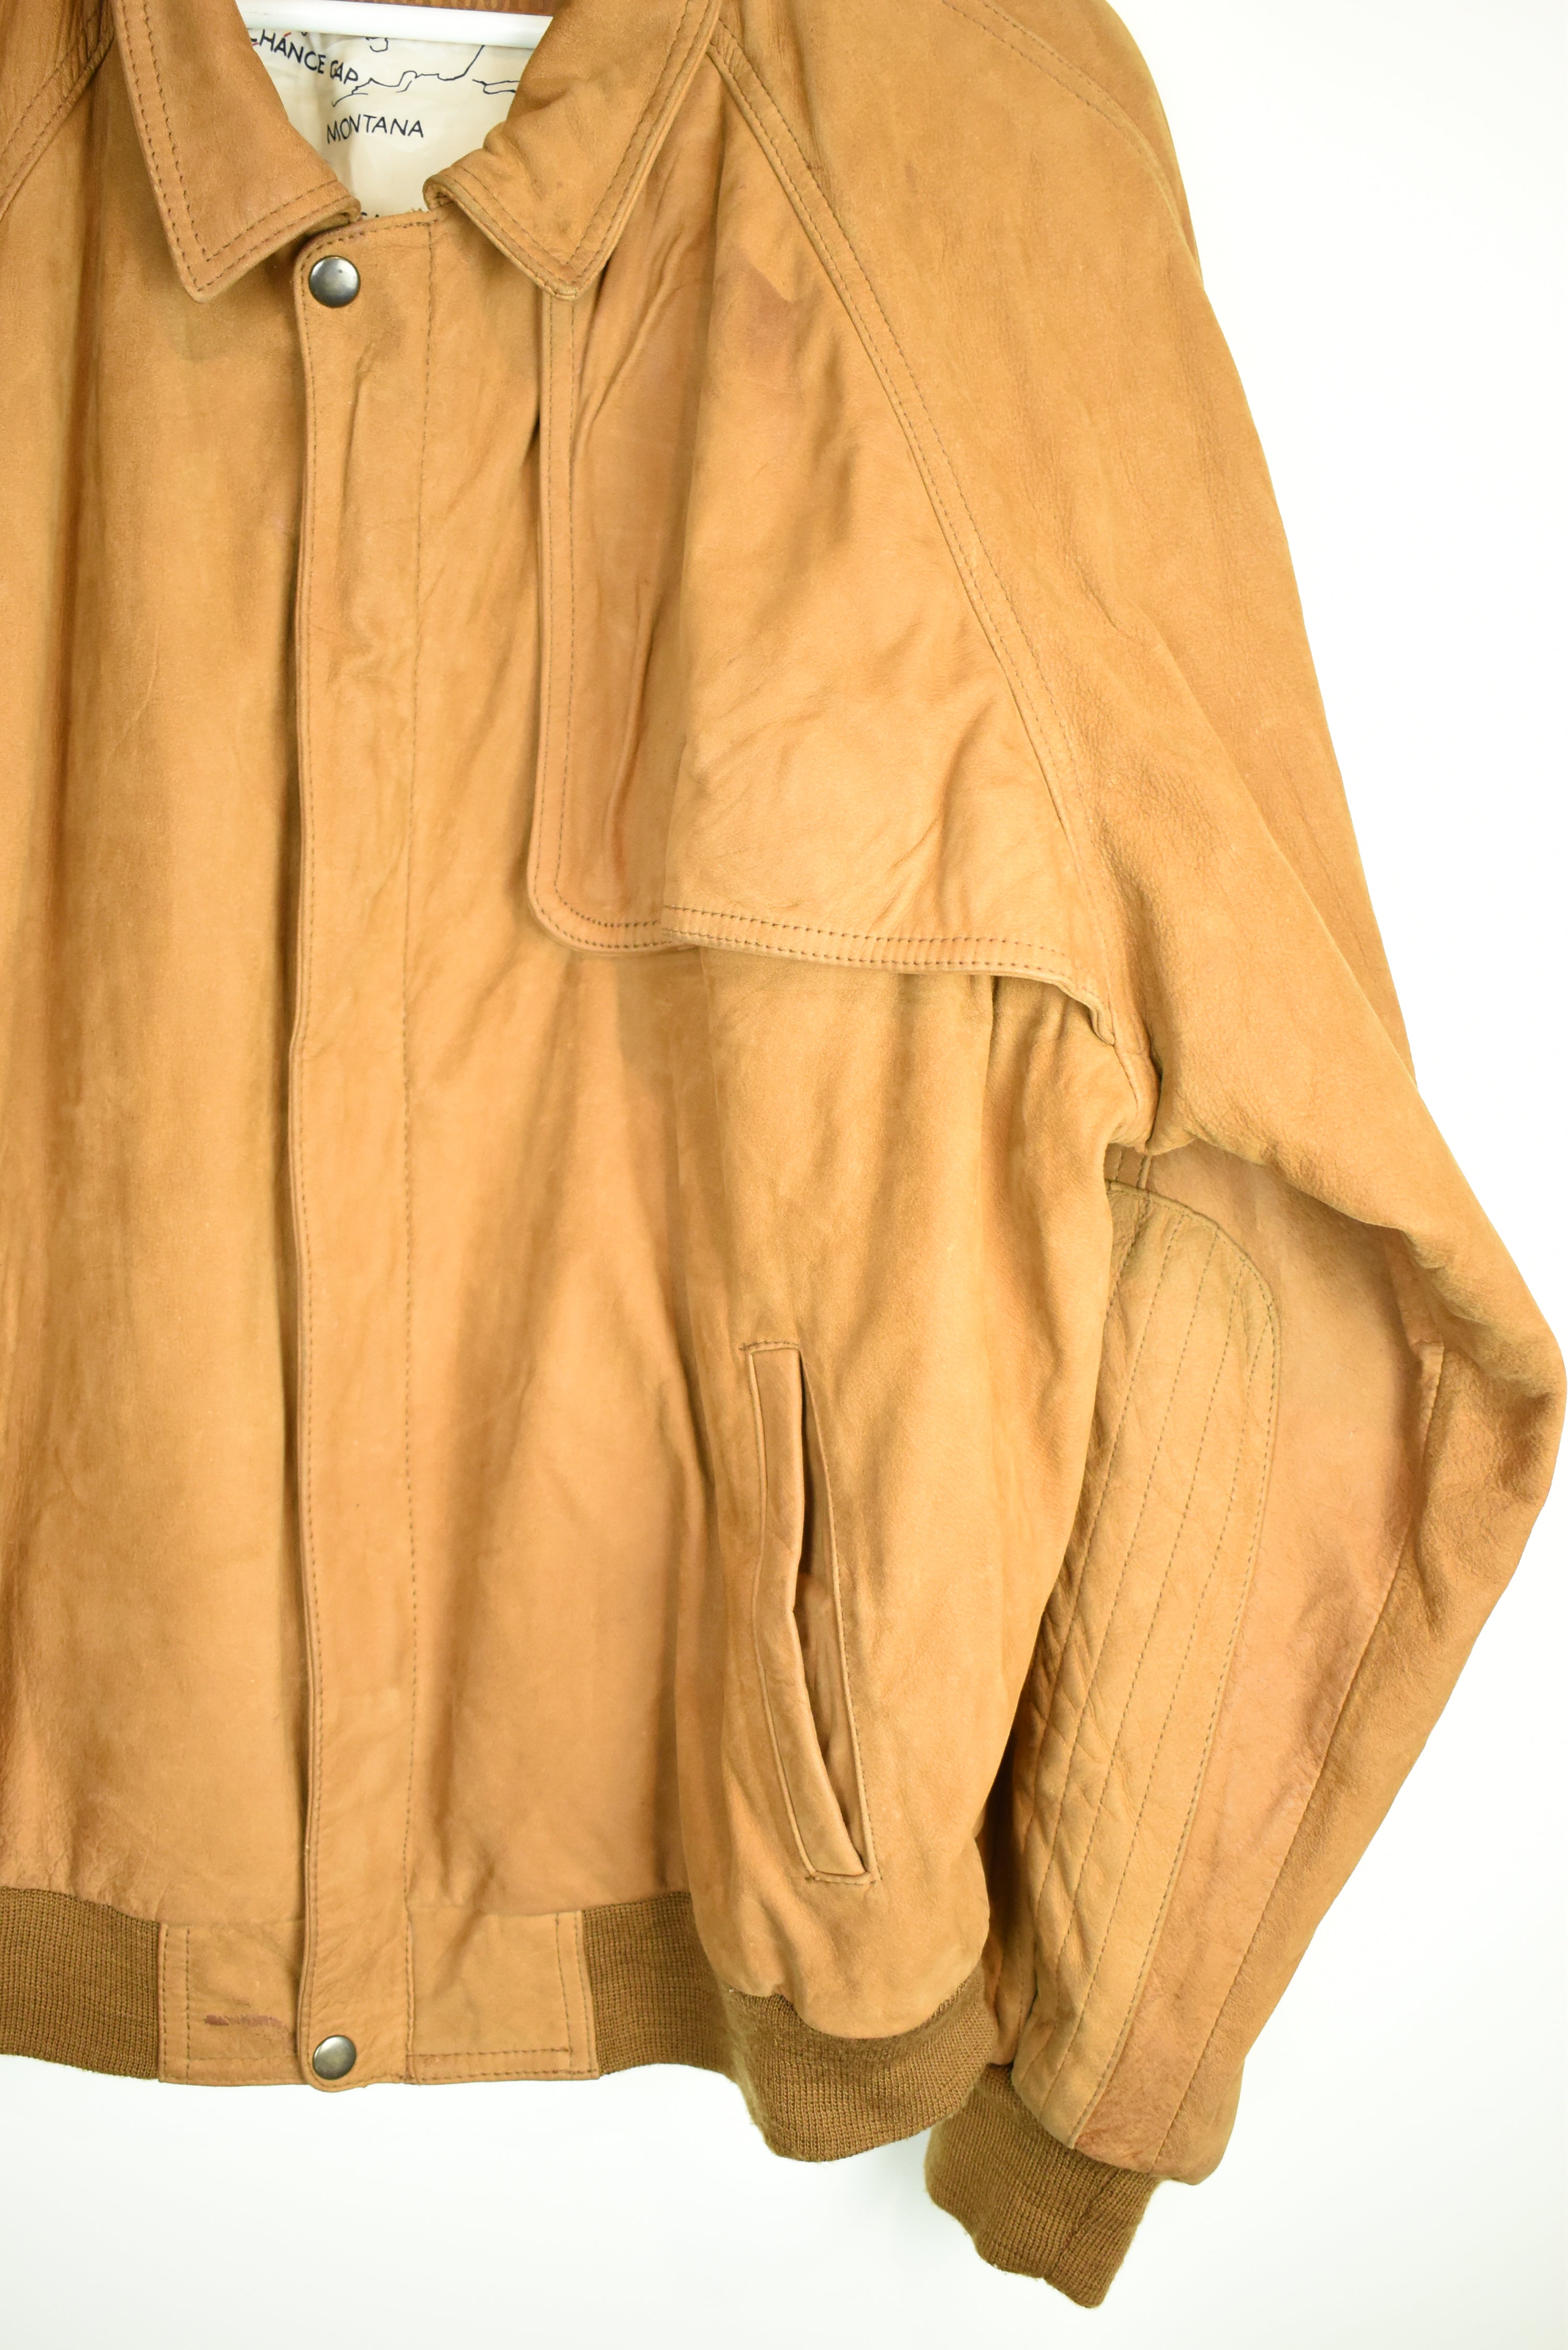 Vintage Marlboro Leather Suede Tan Jacket Large | Vintage Clothing